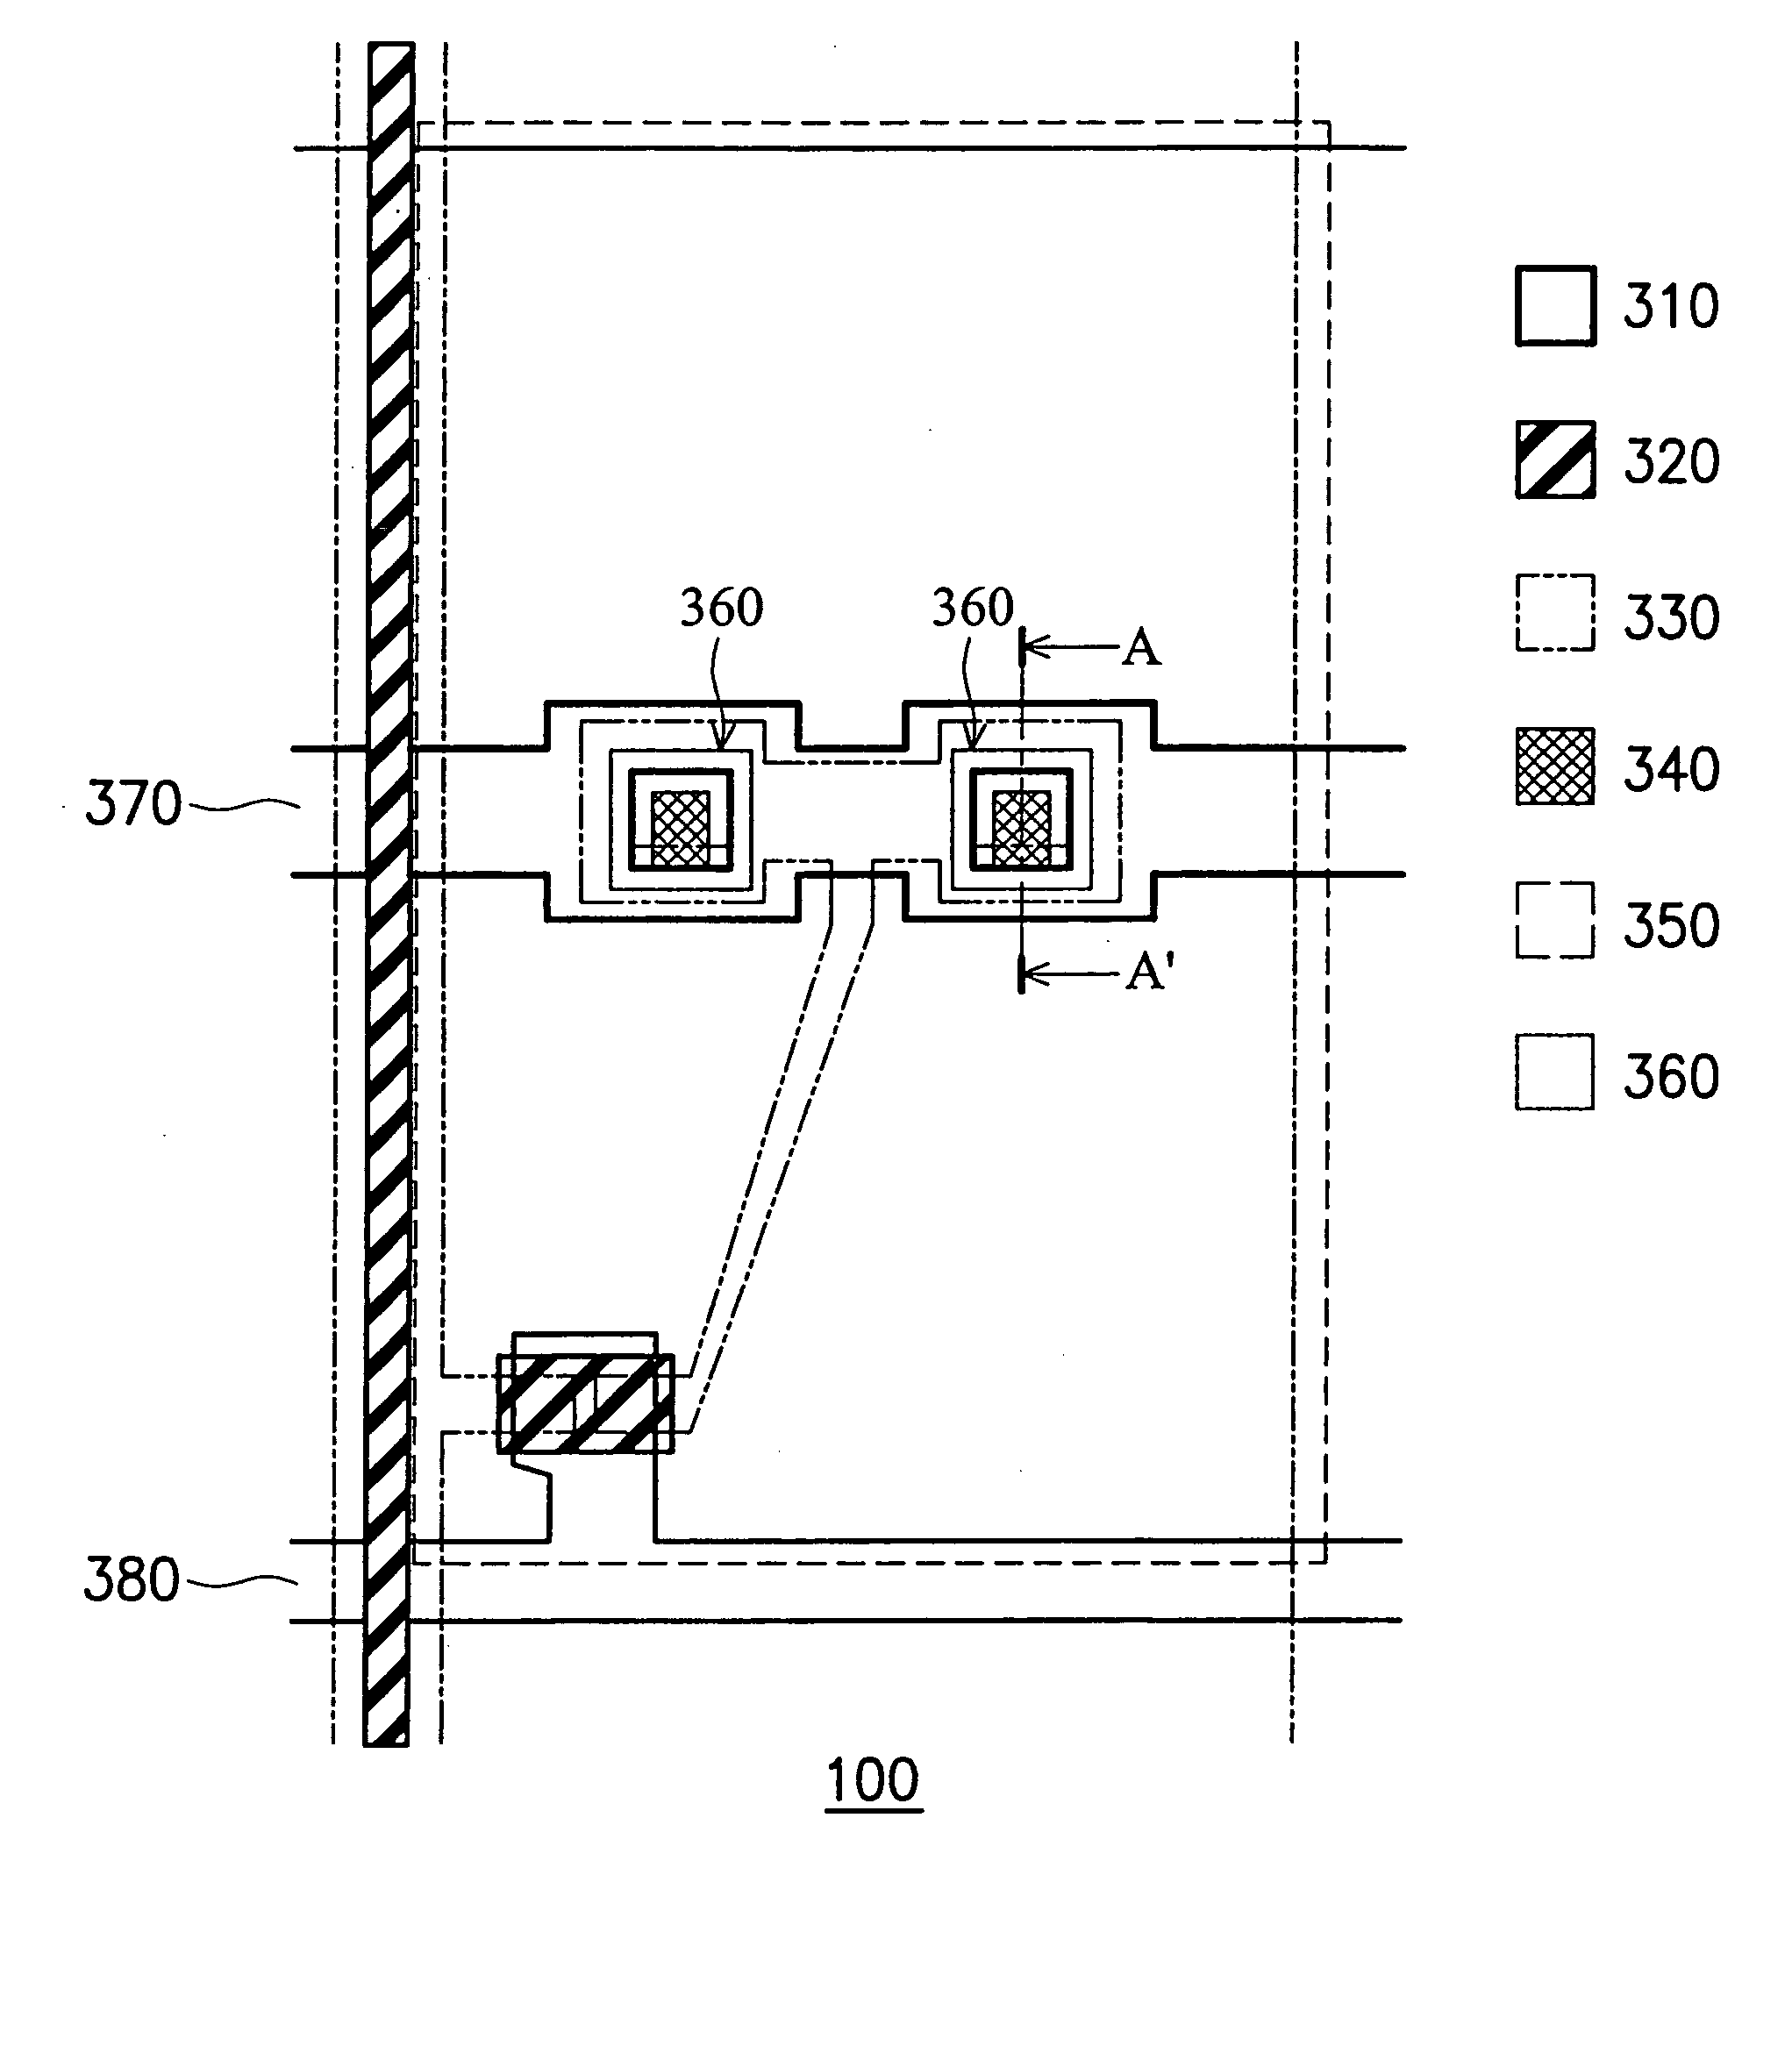 Thin film transistor liquid crystal display and fabrication method thereof